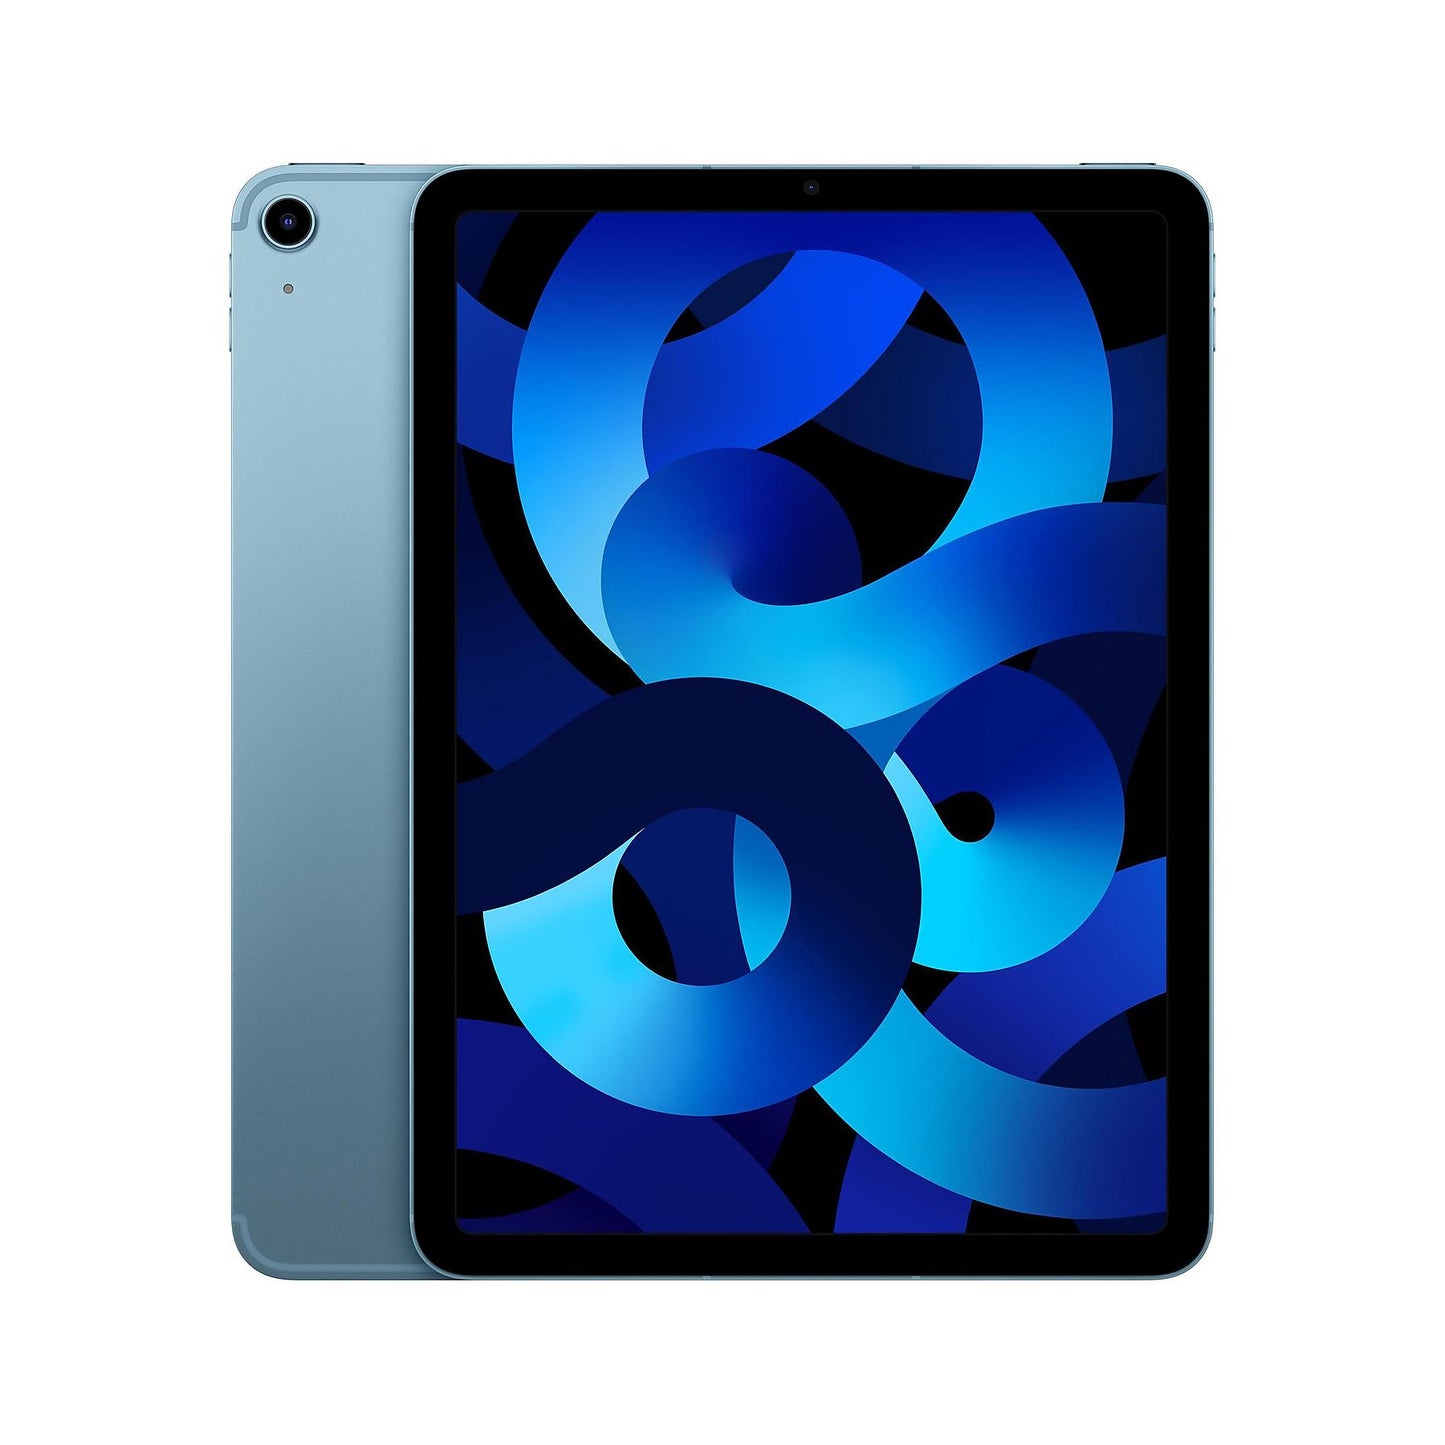 APPLE IPAD AIR WF CL 256GB BLU-FRD, Tablet, 256 GB, 10,9 Zoll, Blau